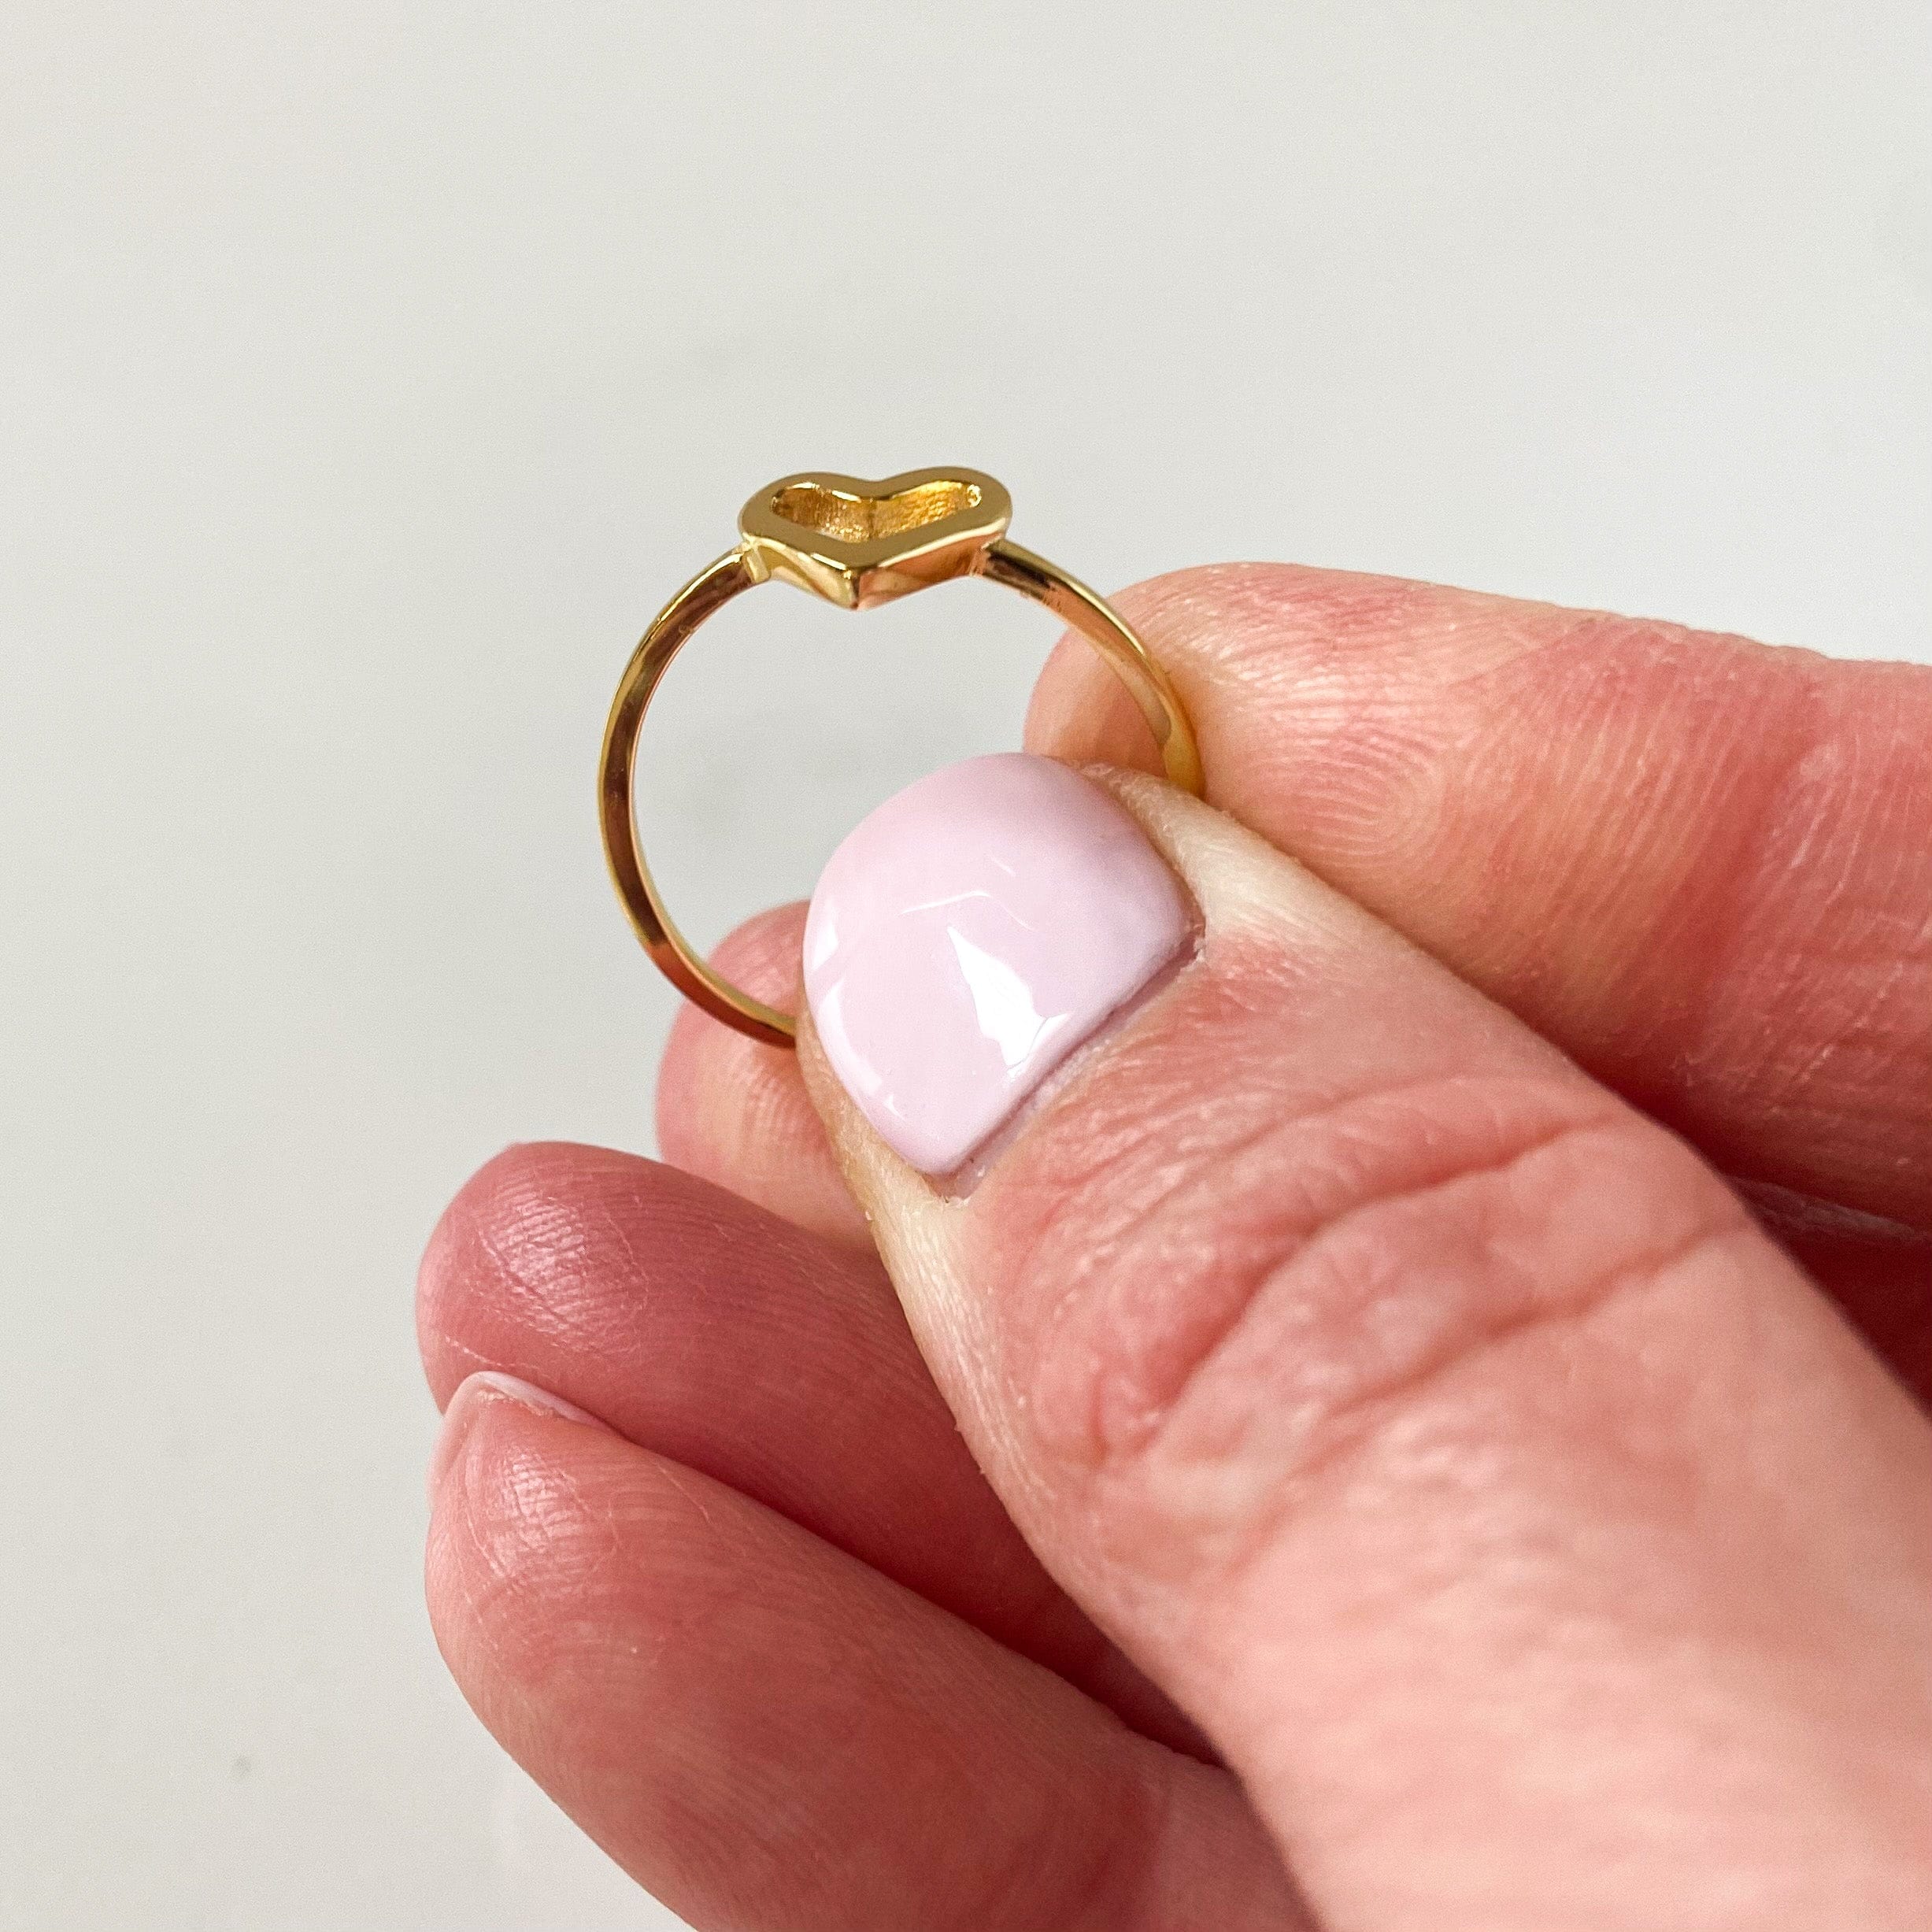 Buy quality Floating Heart Diamond Ring 14k Rose Gold in Pune